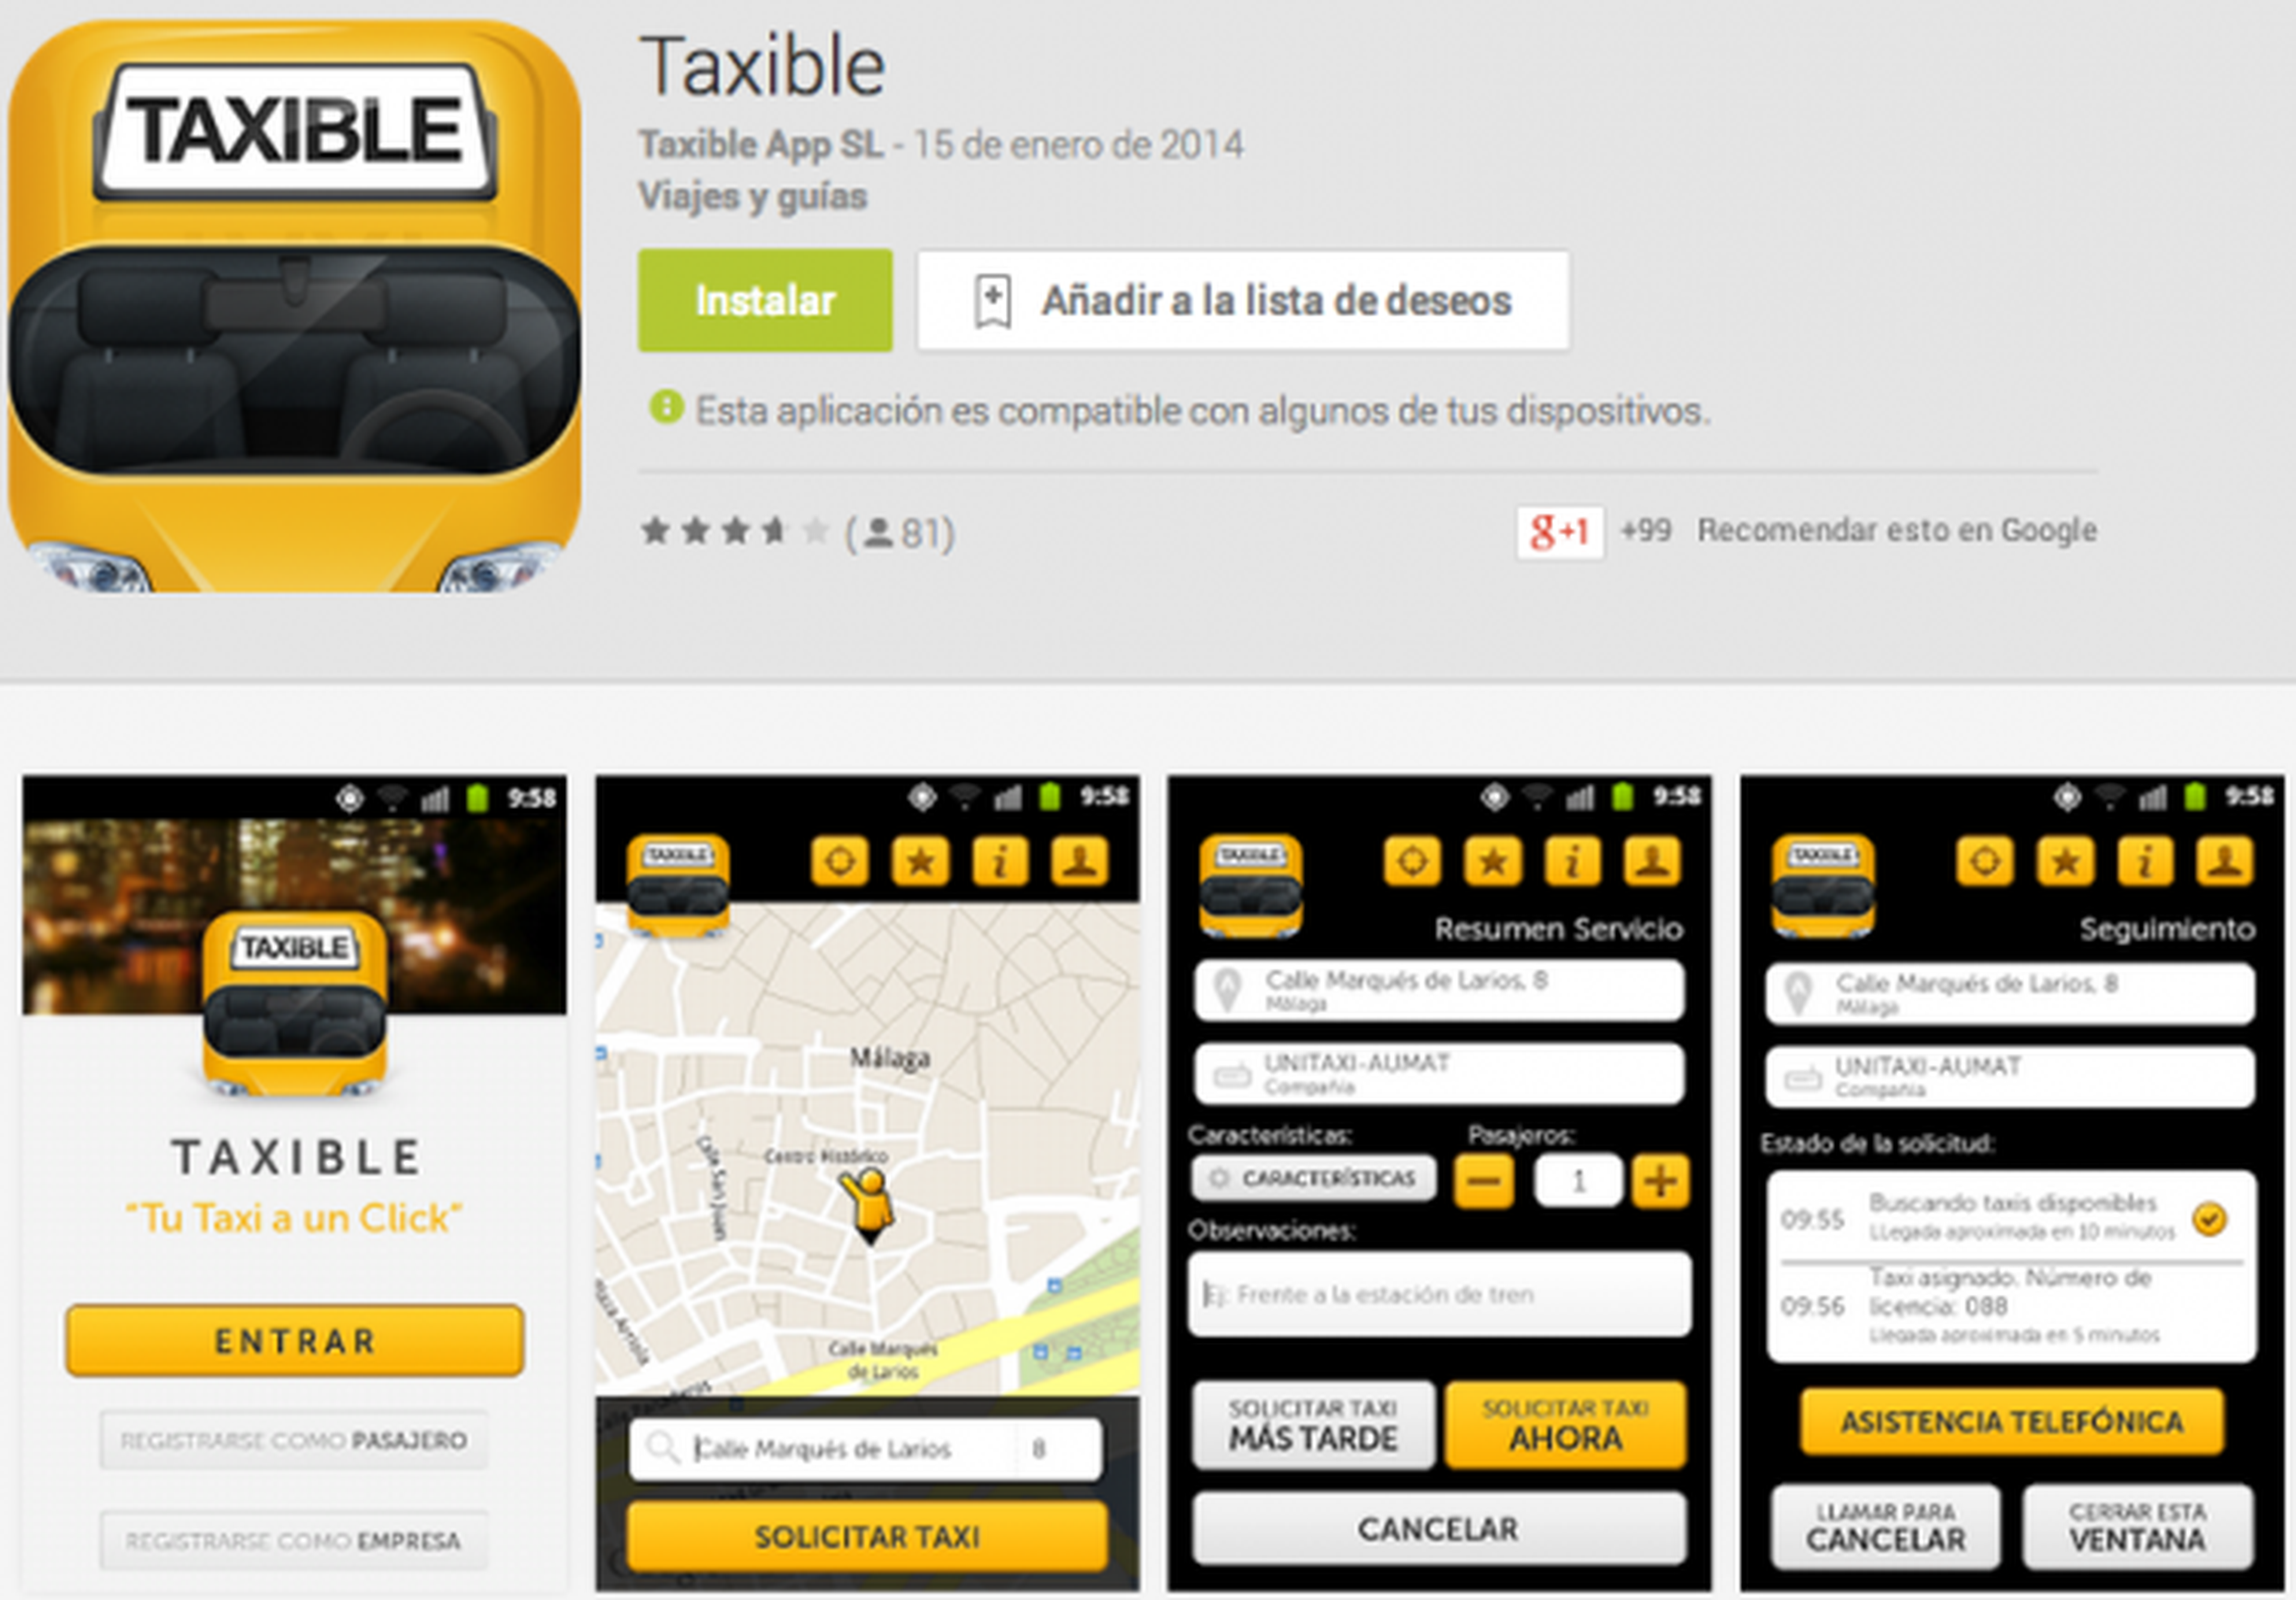 Taxible app